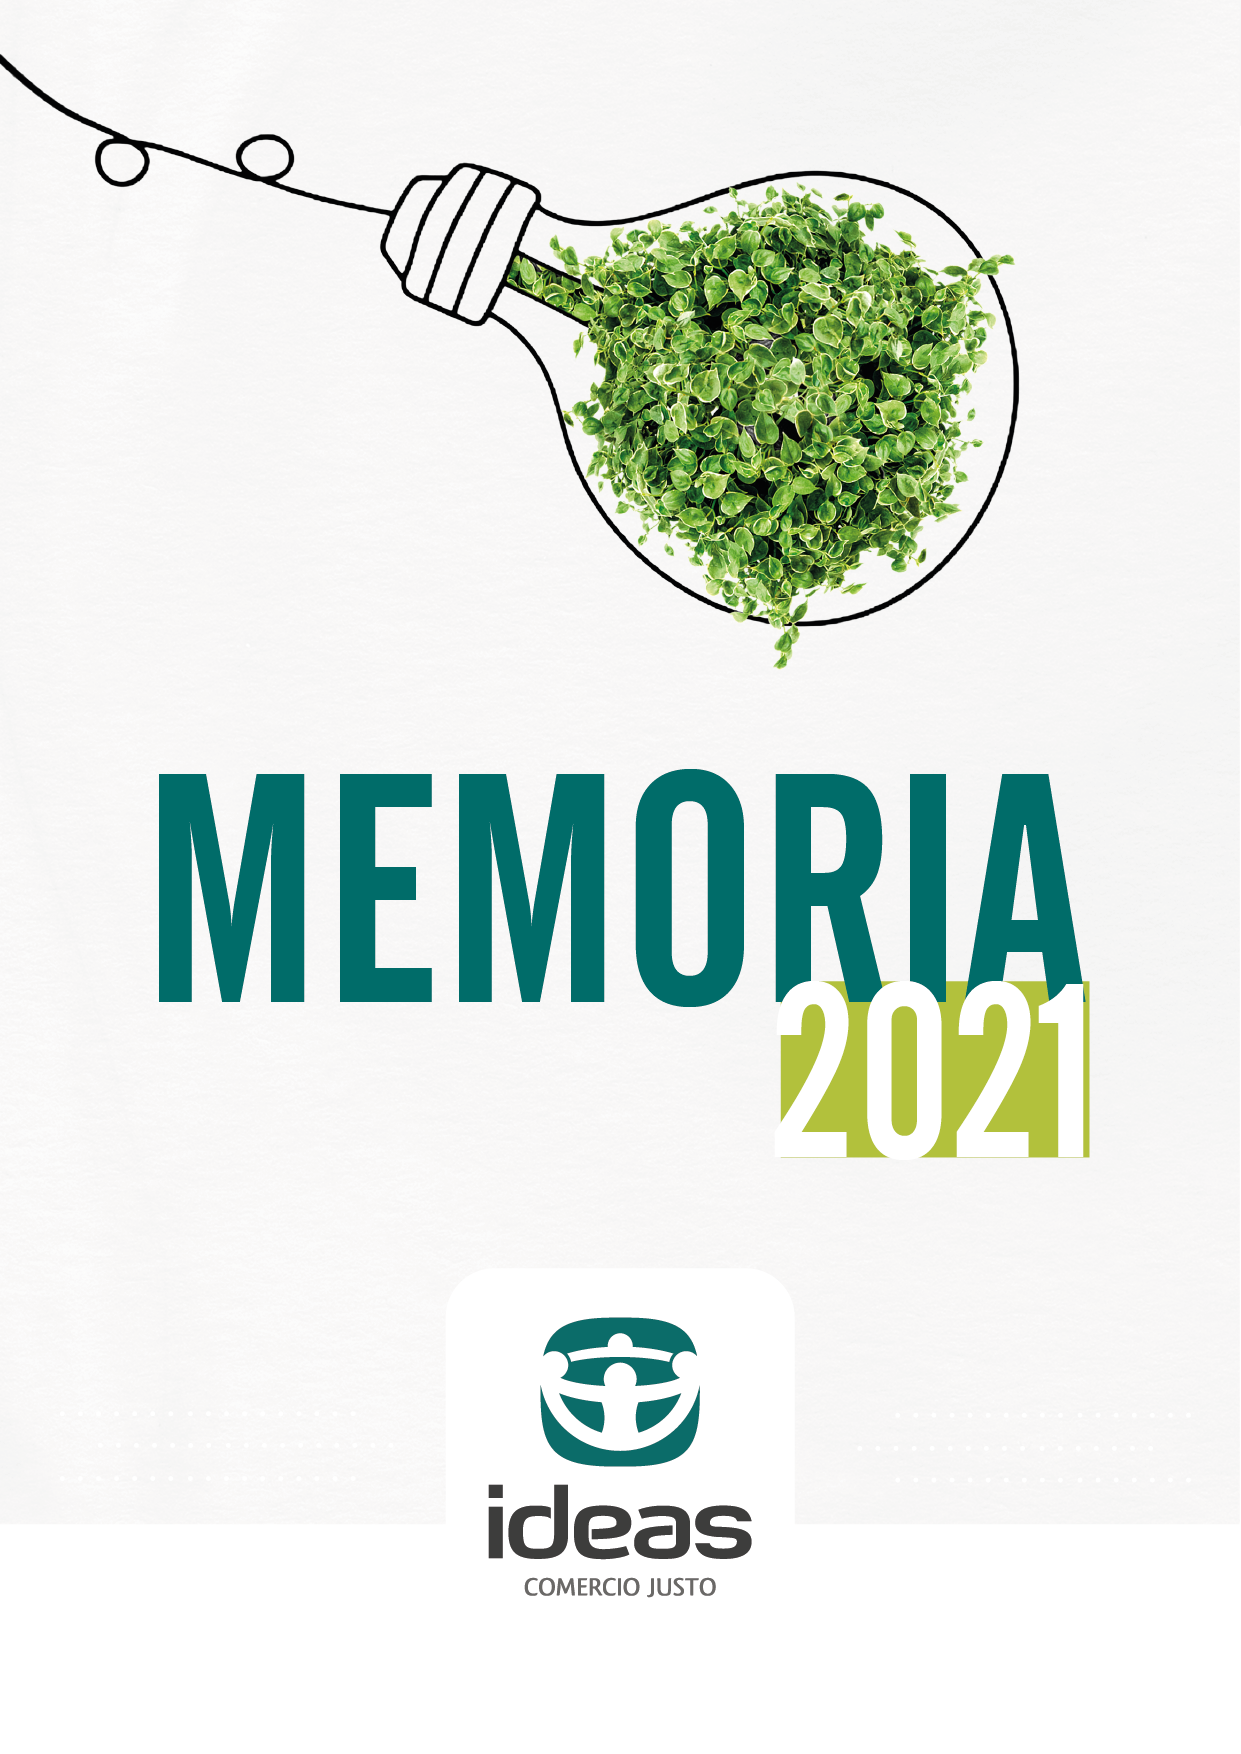 Memoria IDEAS Comercio Justo 2021